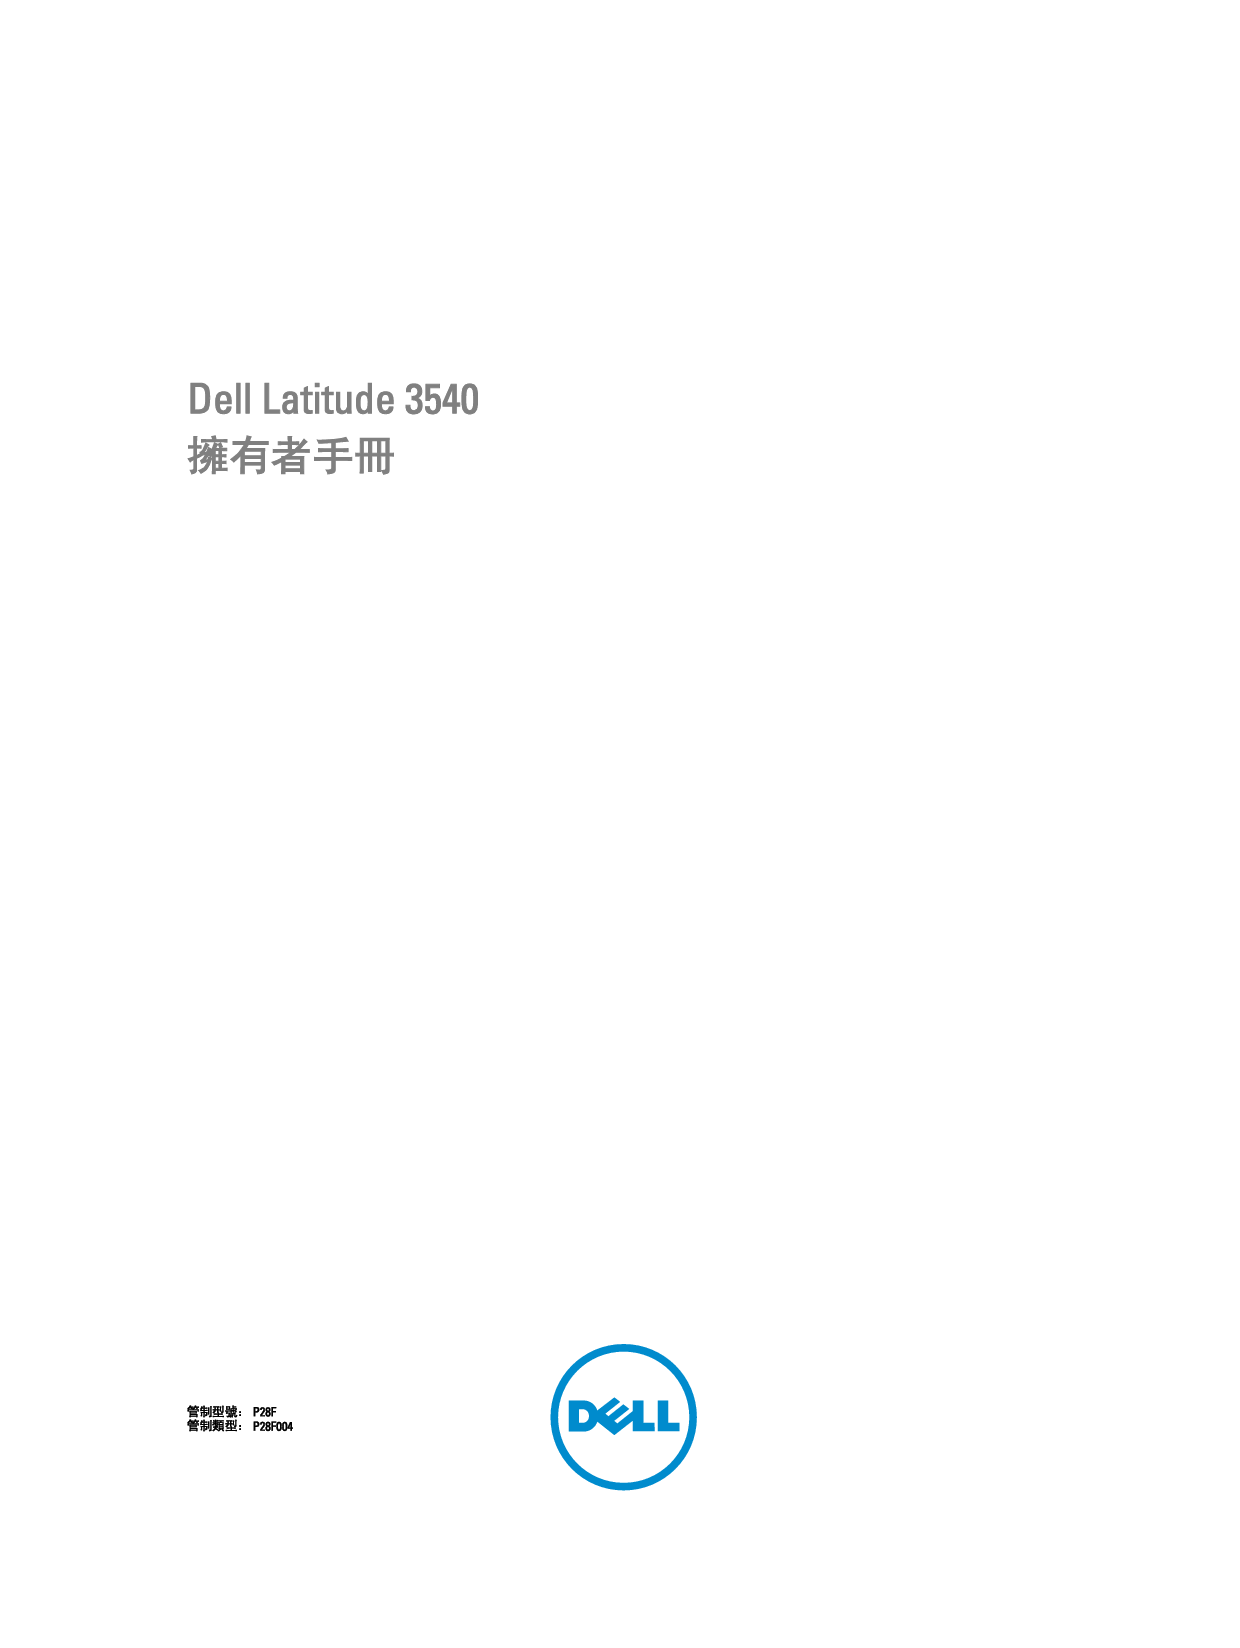 戴尔 Dell Latitude 3540 繁体 用户手册 封面